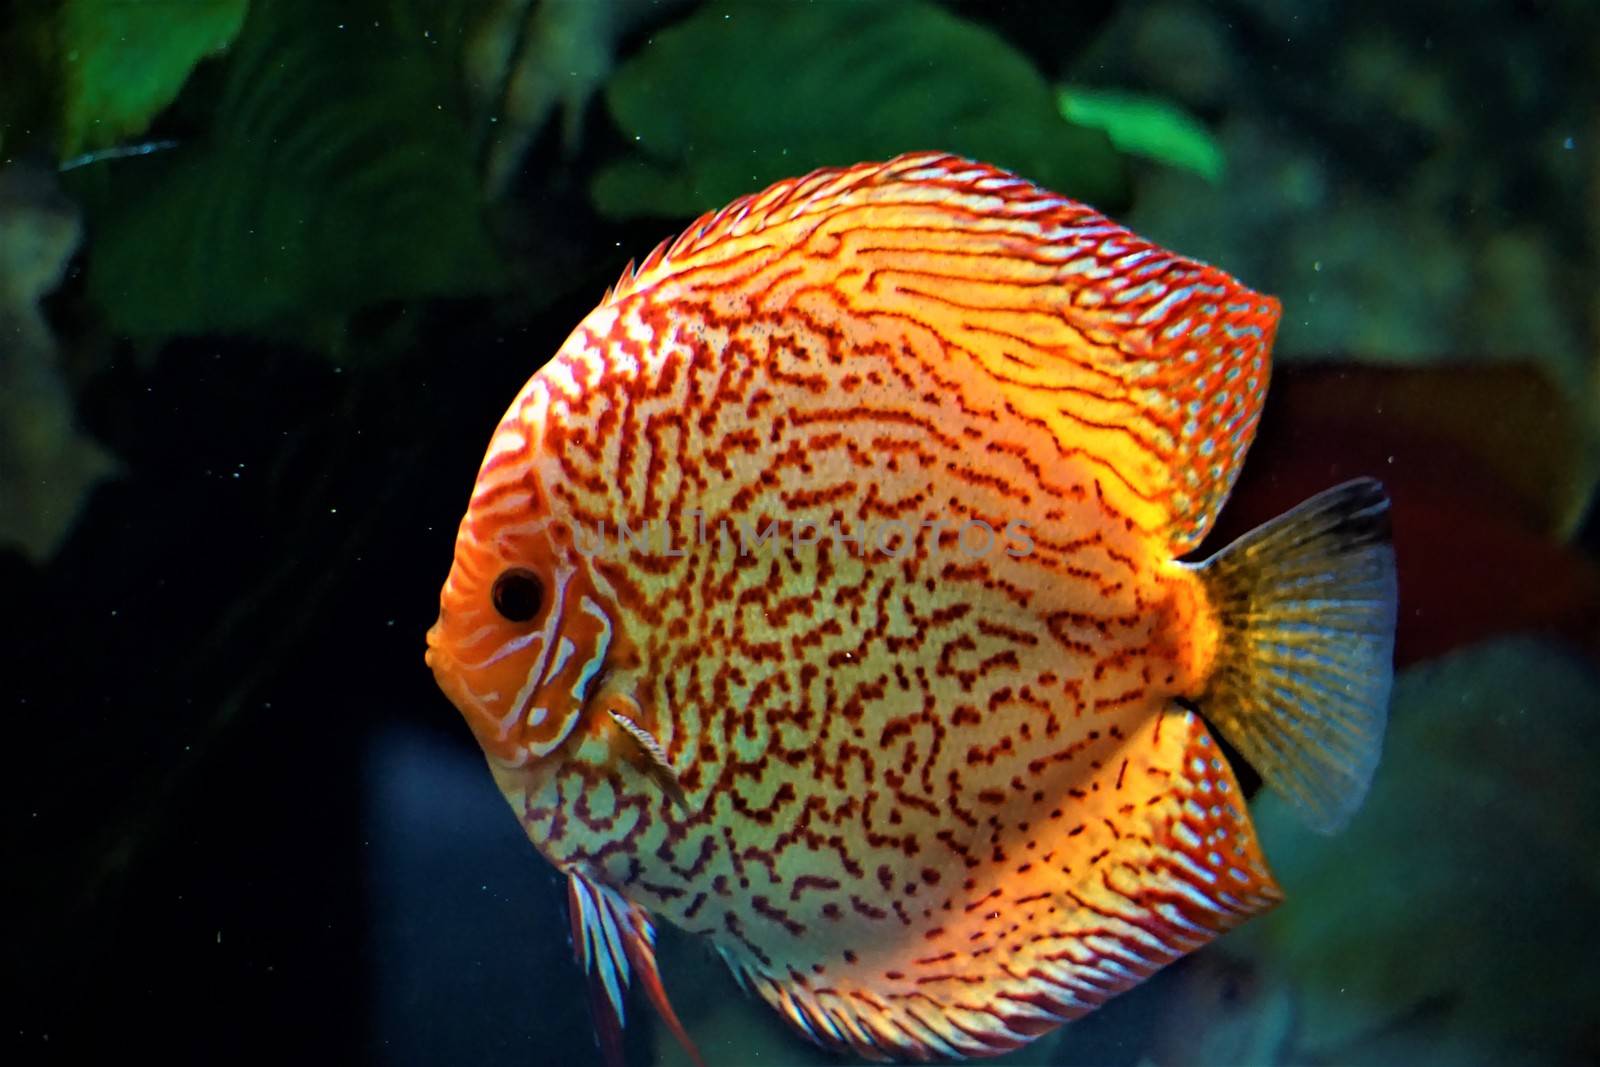 Discus fish swimming in an aquarium in the zoo